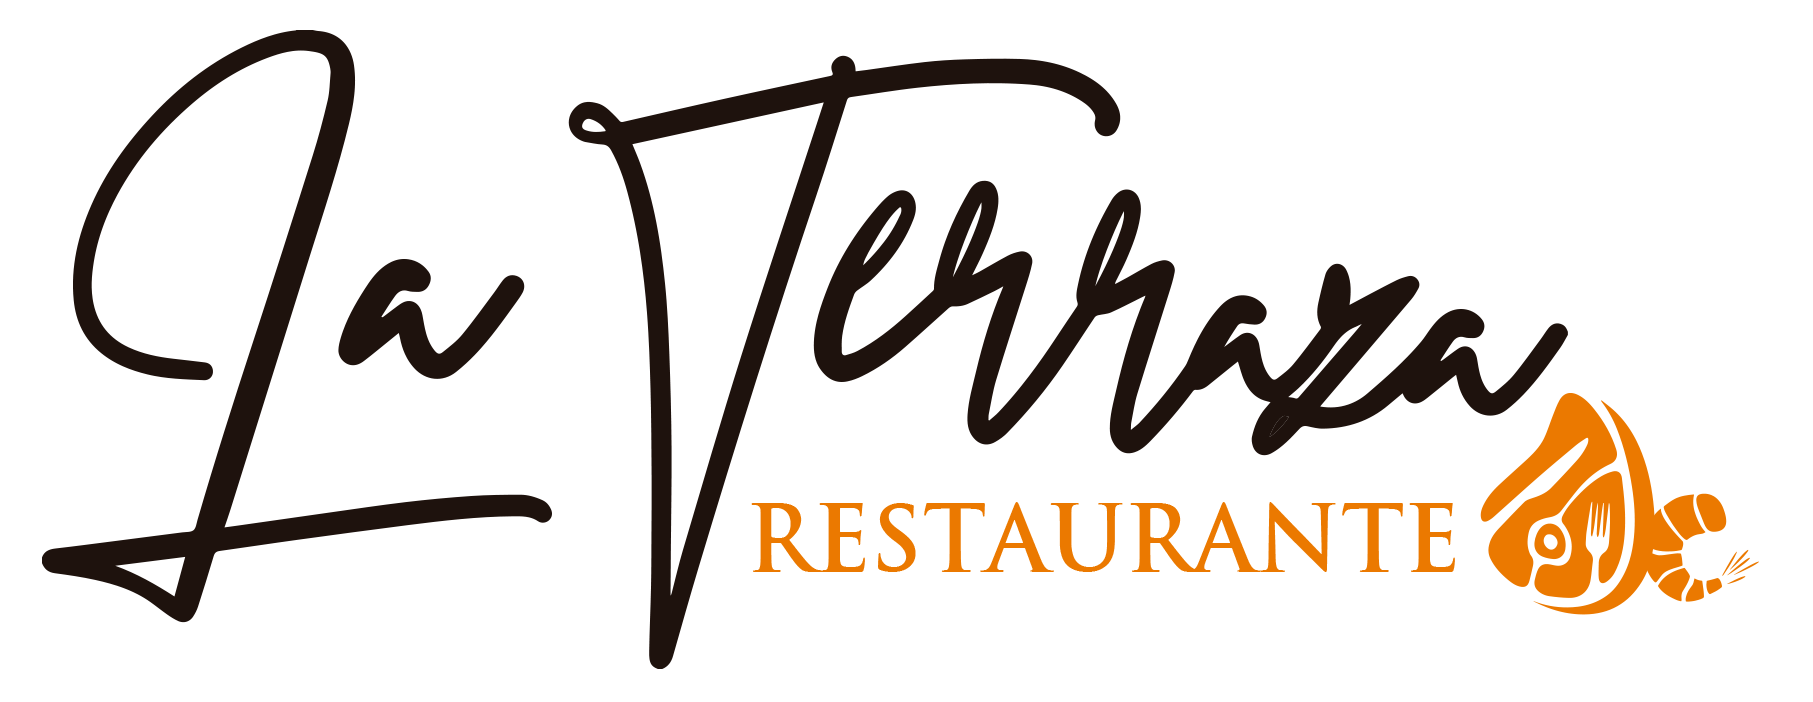 La Terraza Restaurante Logo